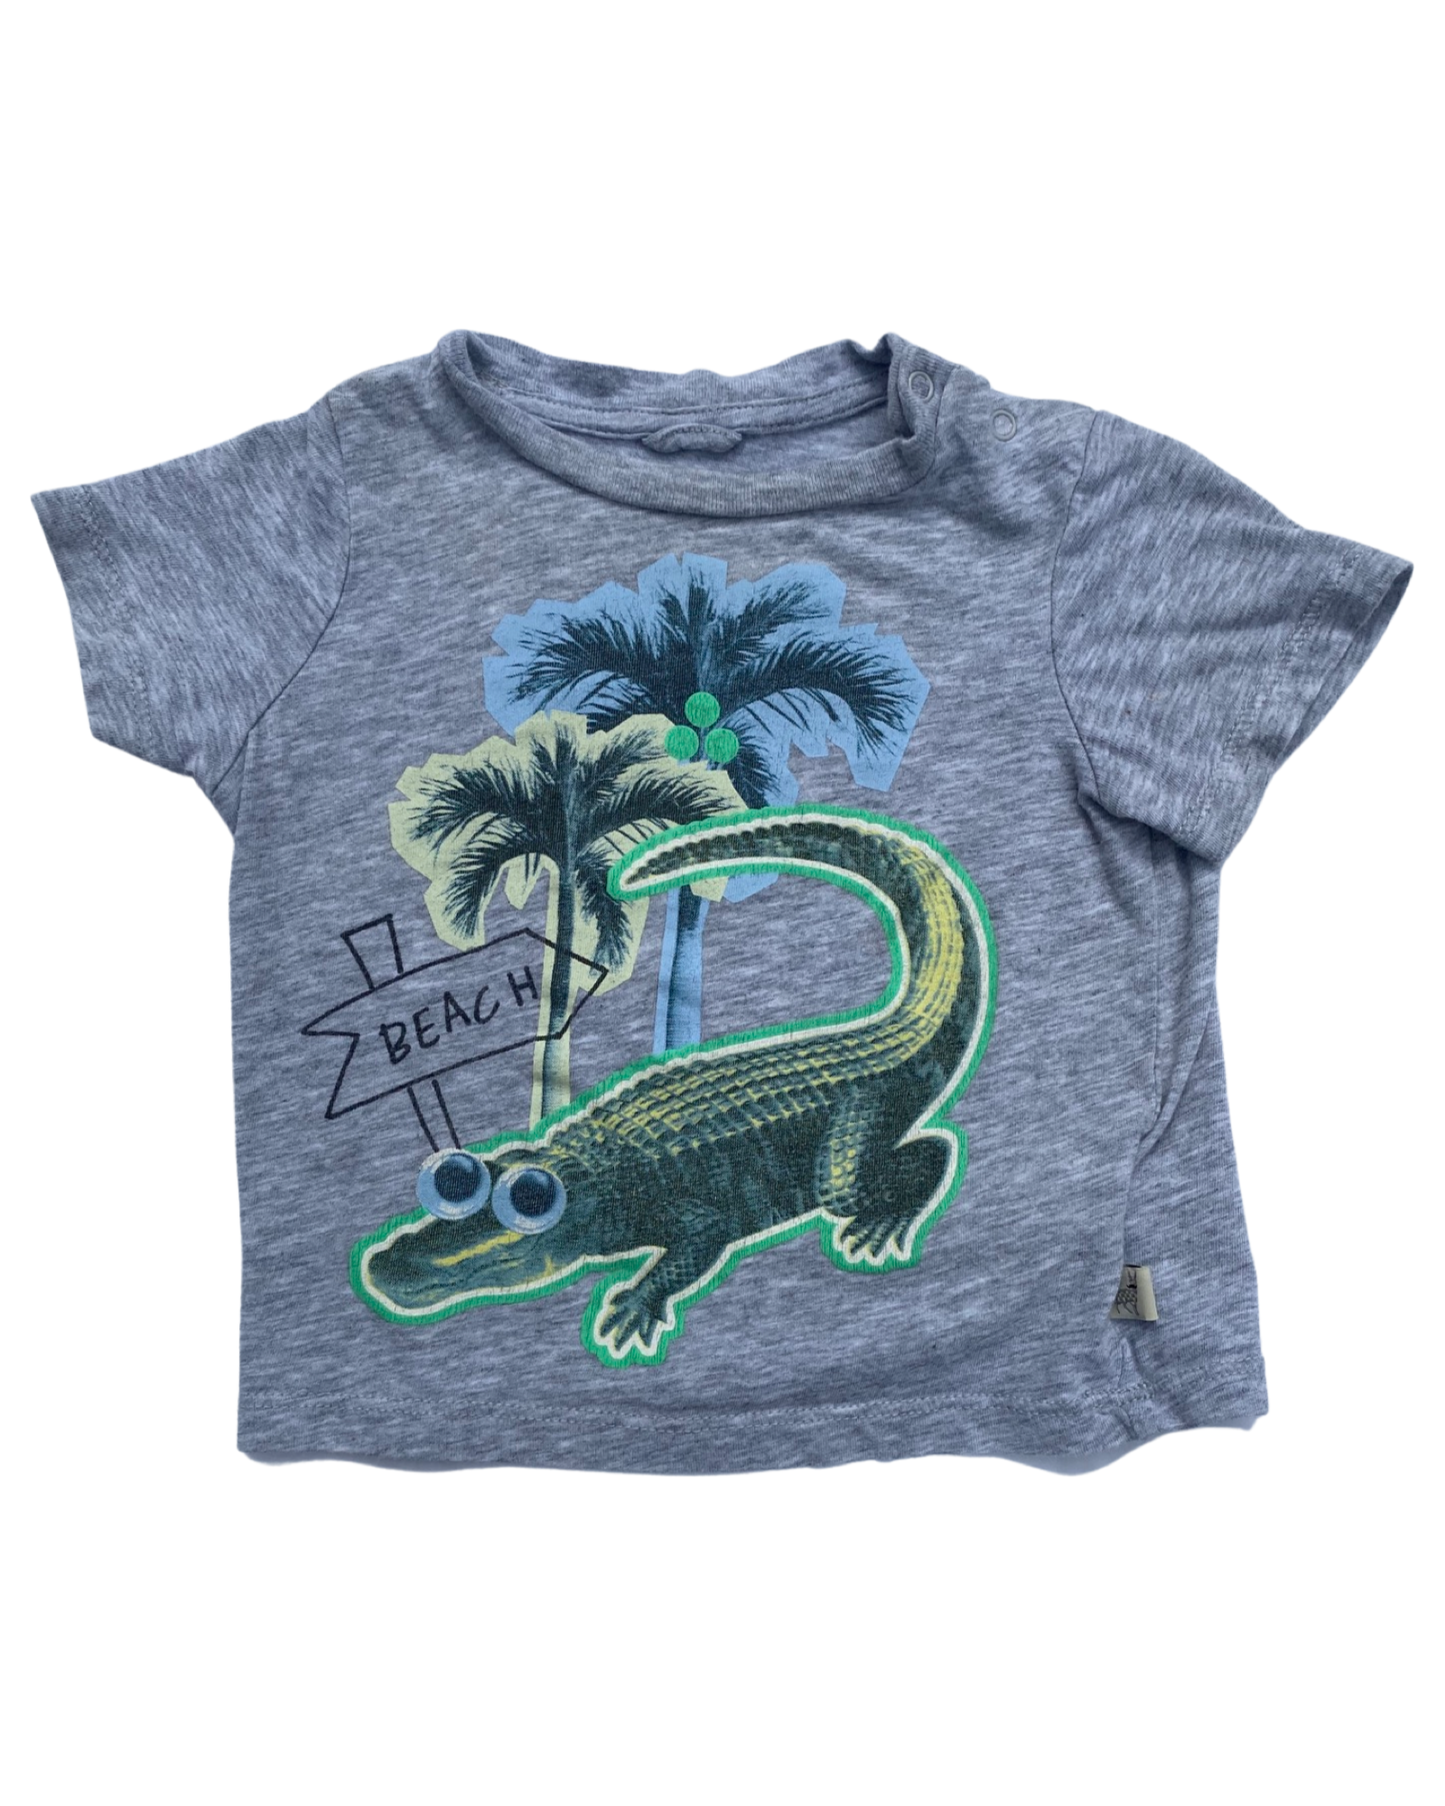 Stella McCartney crocodile beach t shirt (size 3-6mths)